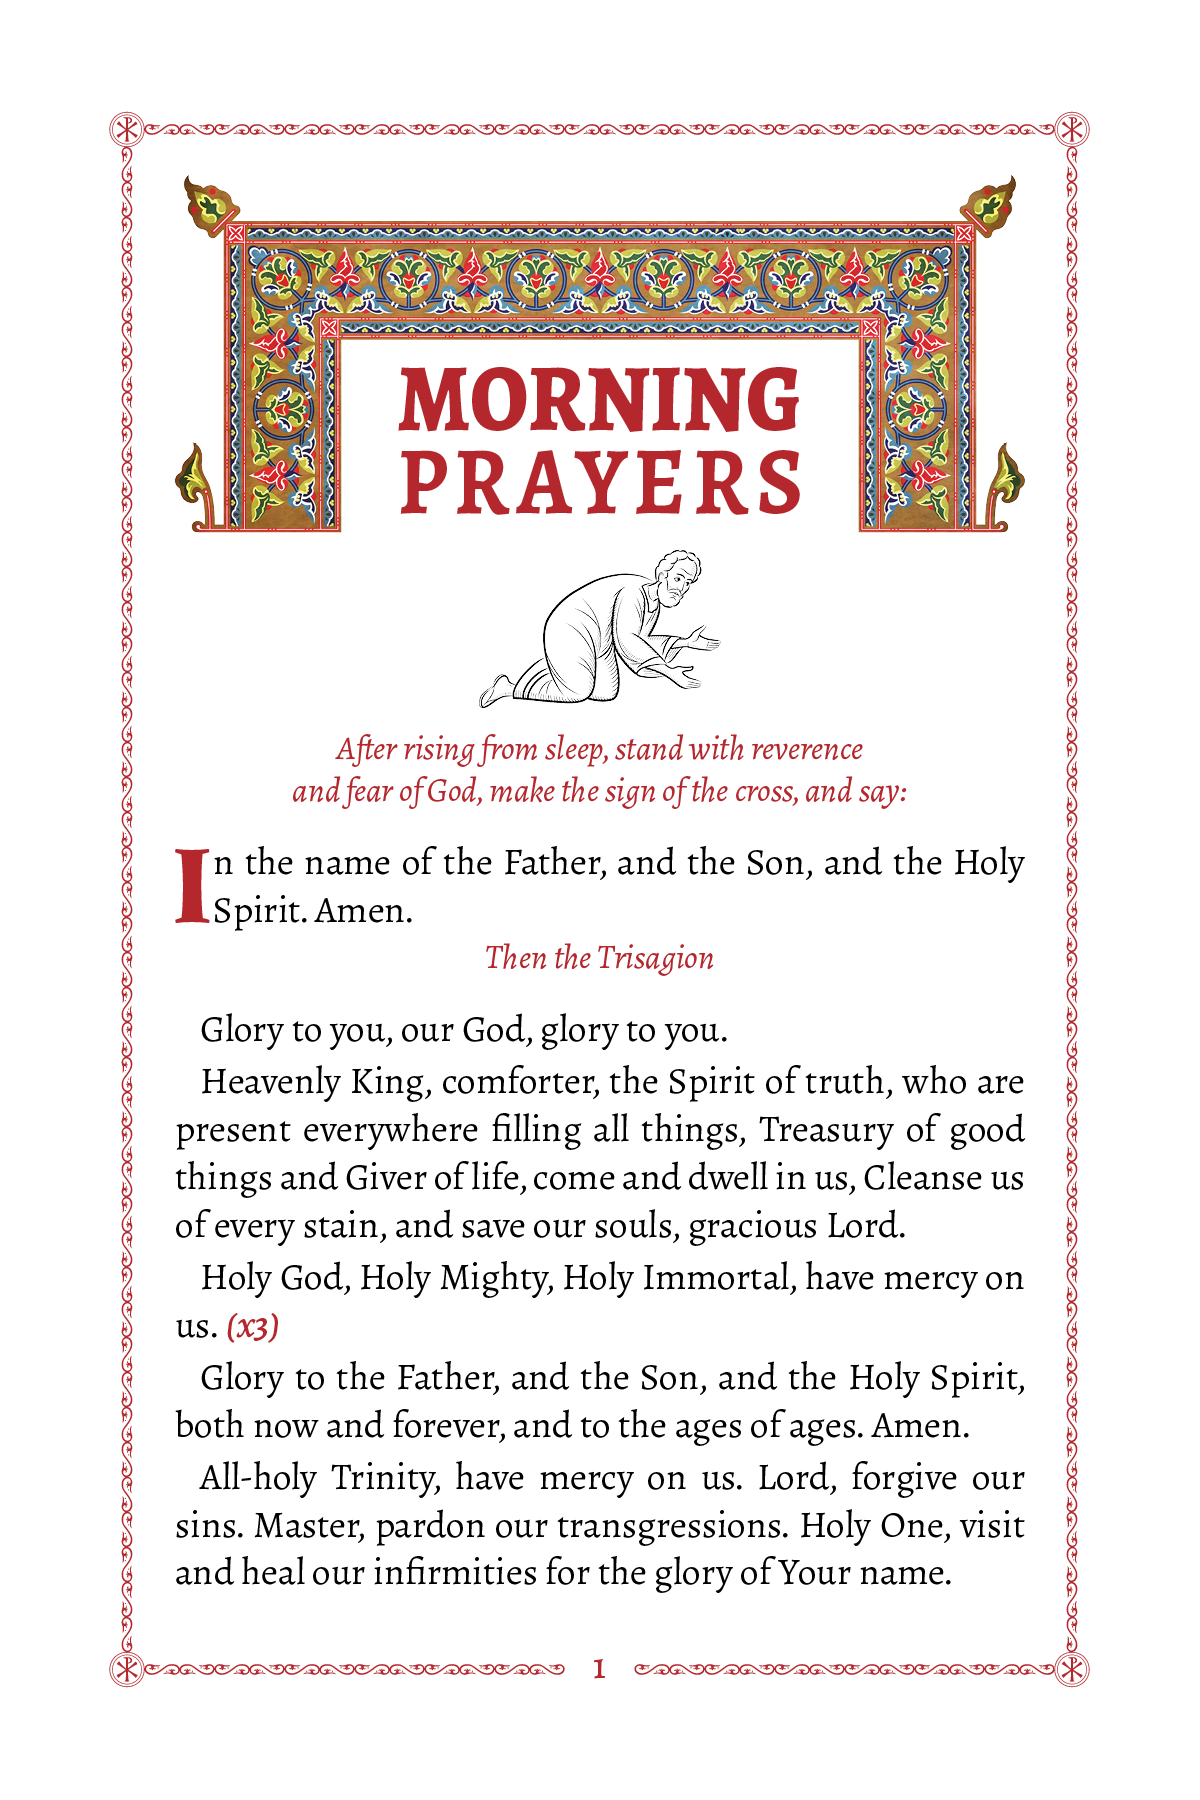 Orthodox Christian Prayer Book Newrome Press